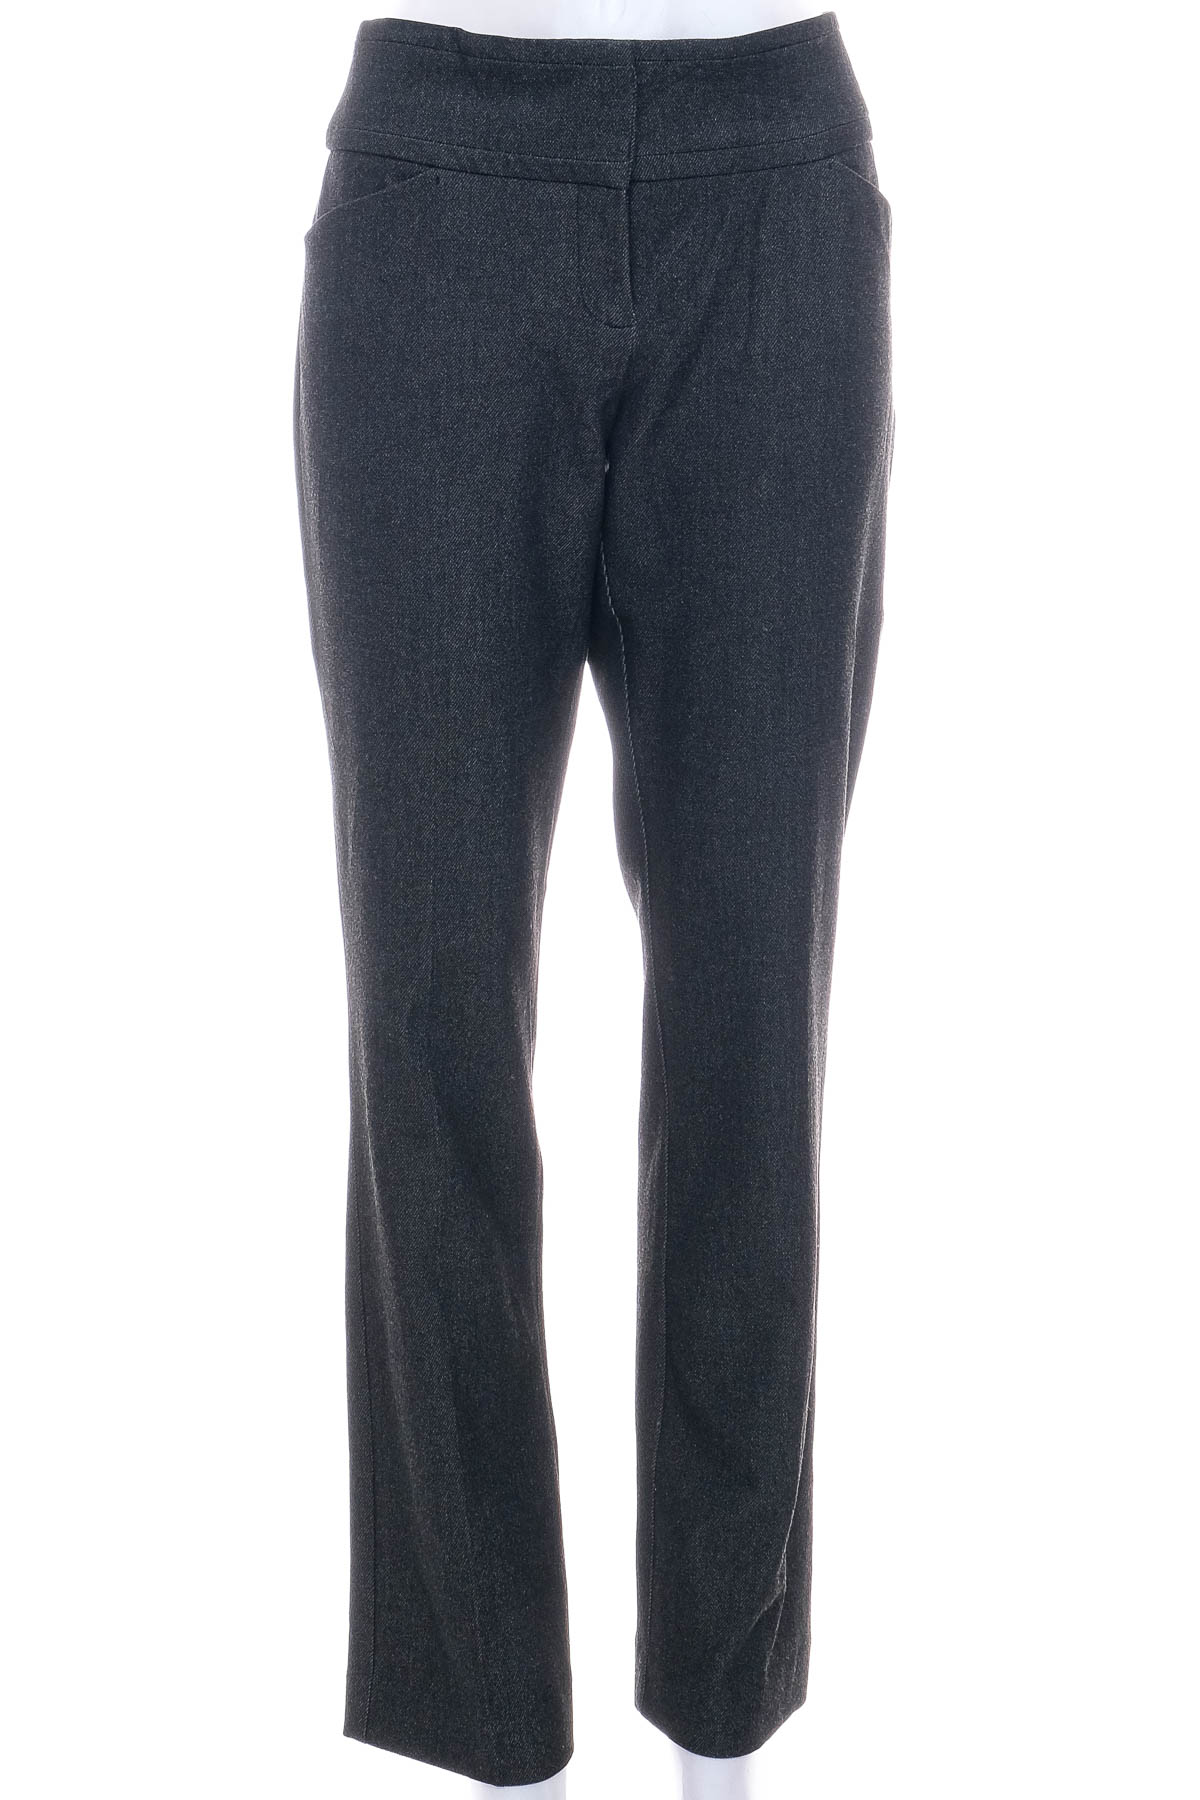 Pantaloni de damă - New York & Company - 0